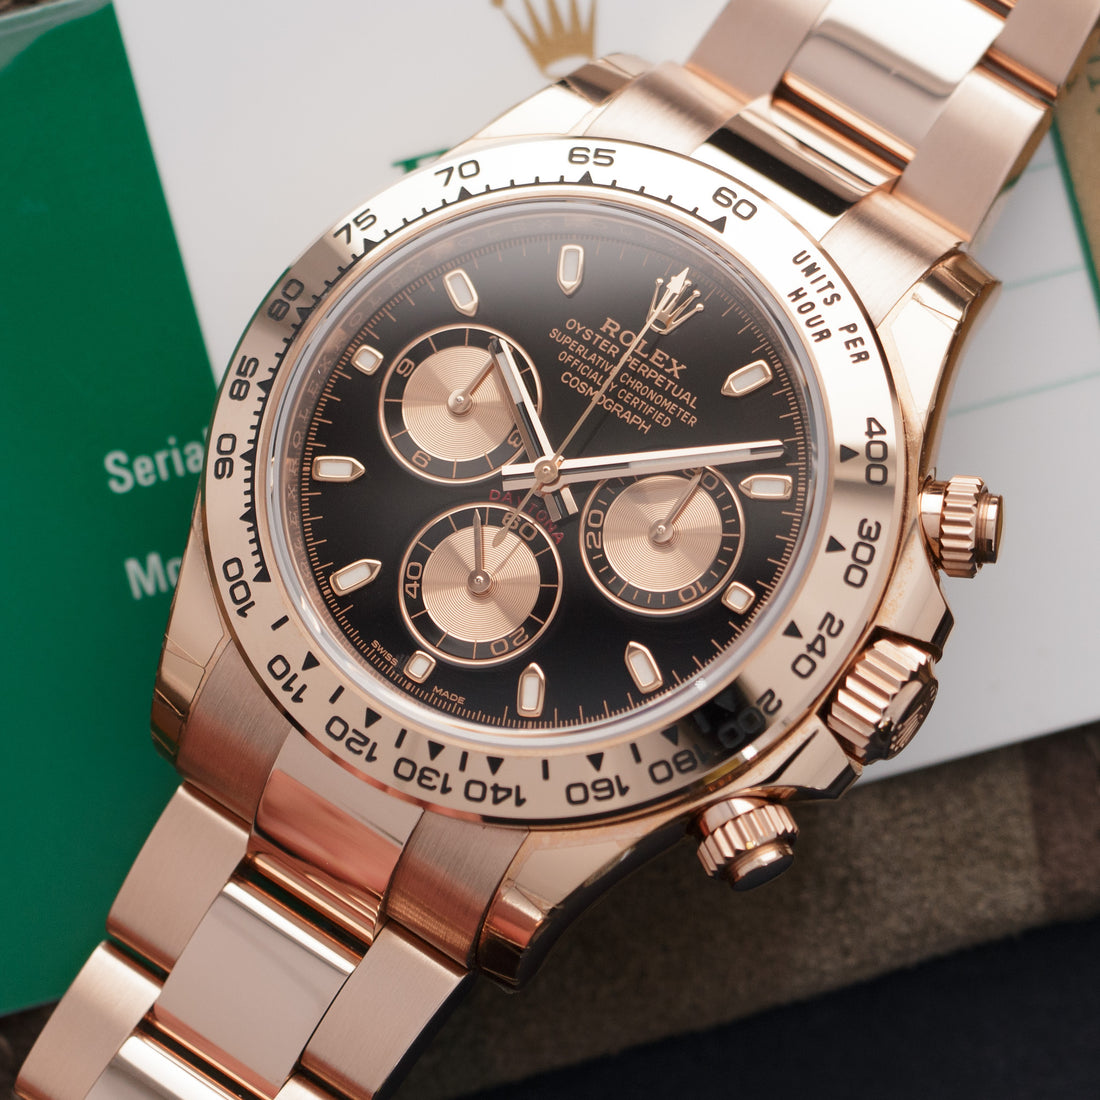 Rolex Everose Cosmograph Daytona Watch Ref. 116505